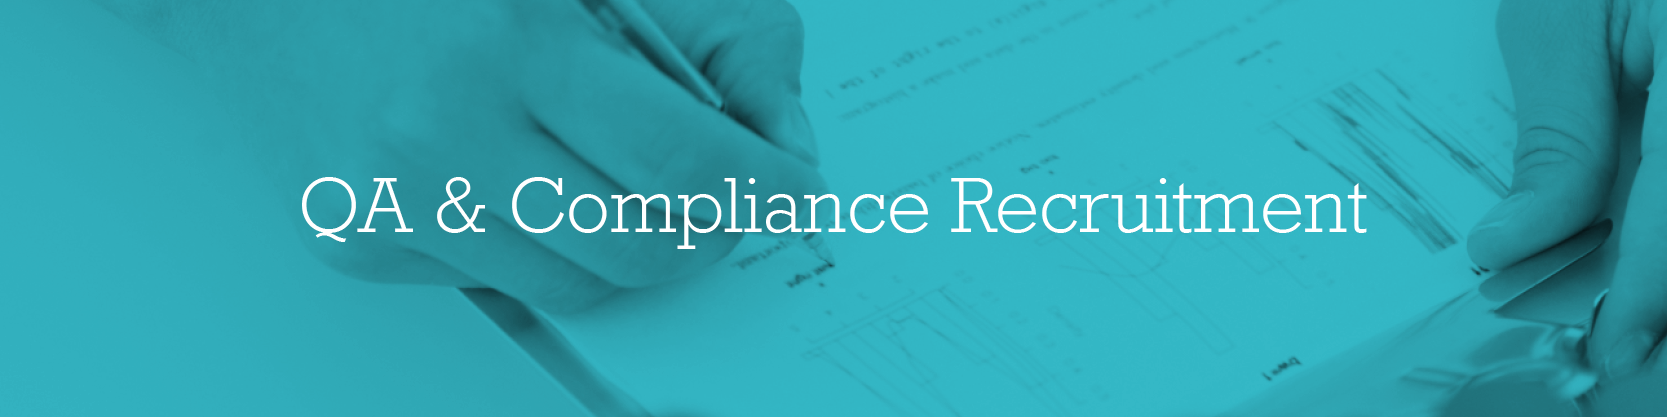 Quality Assurance & Compliance Recruitment